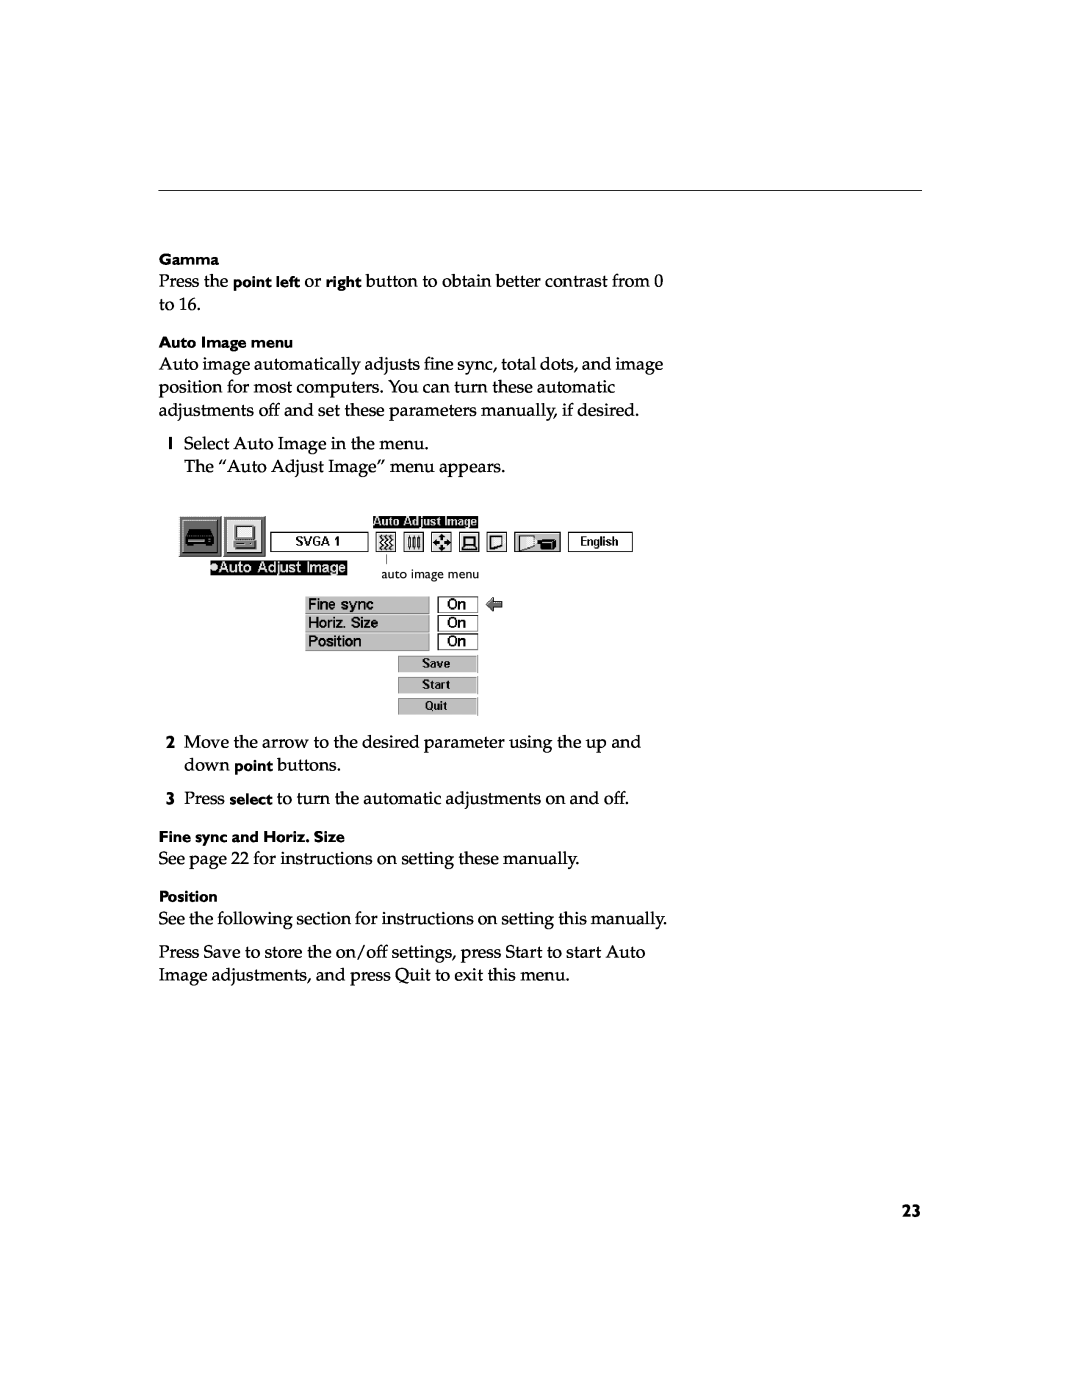 InFocus LP260 manual Select Auto Image in the menu The “Auto Adjust Image” menu appears 